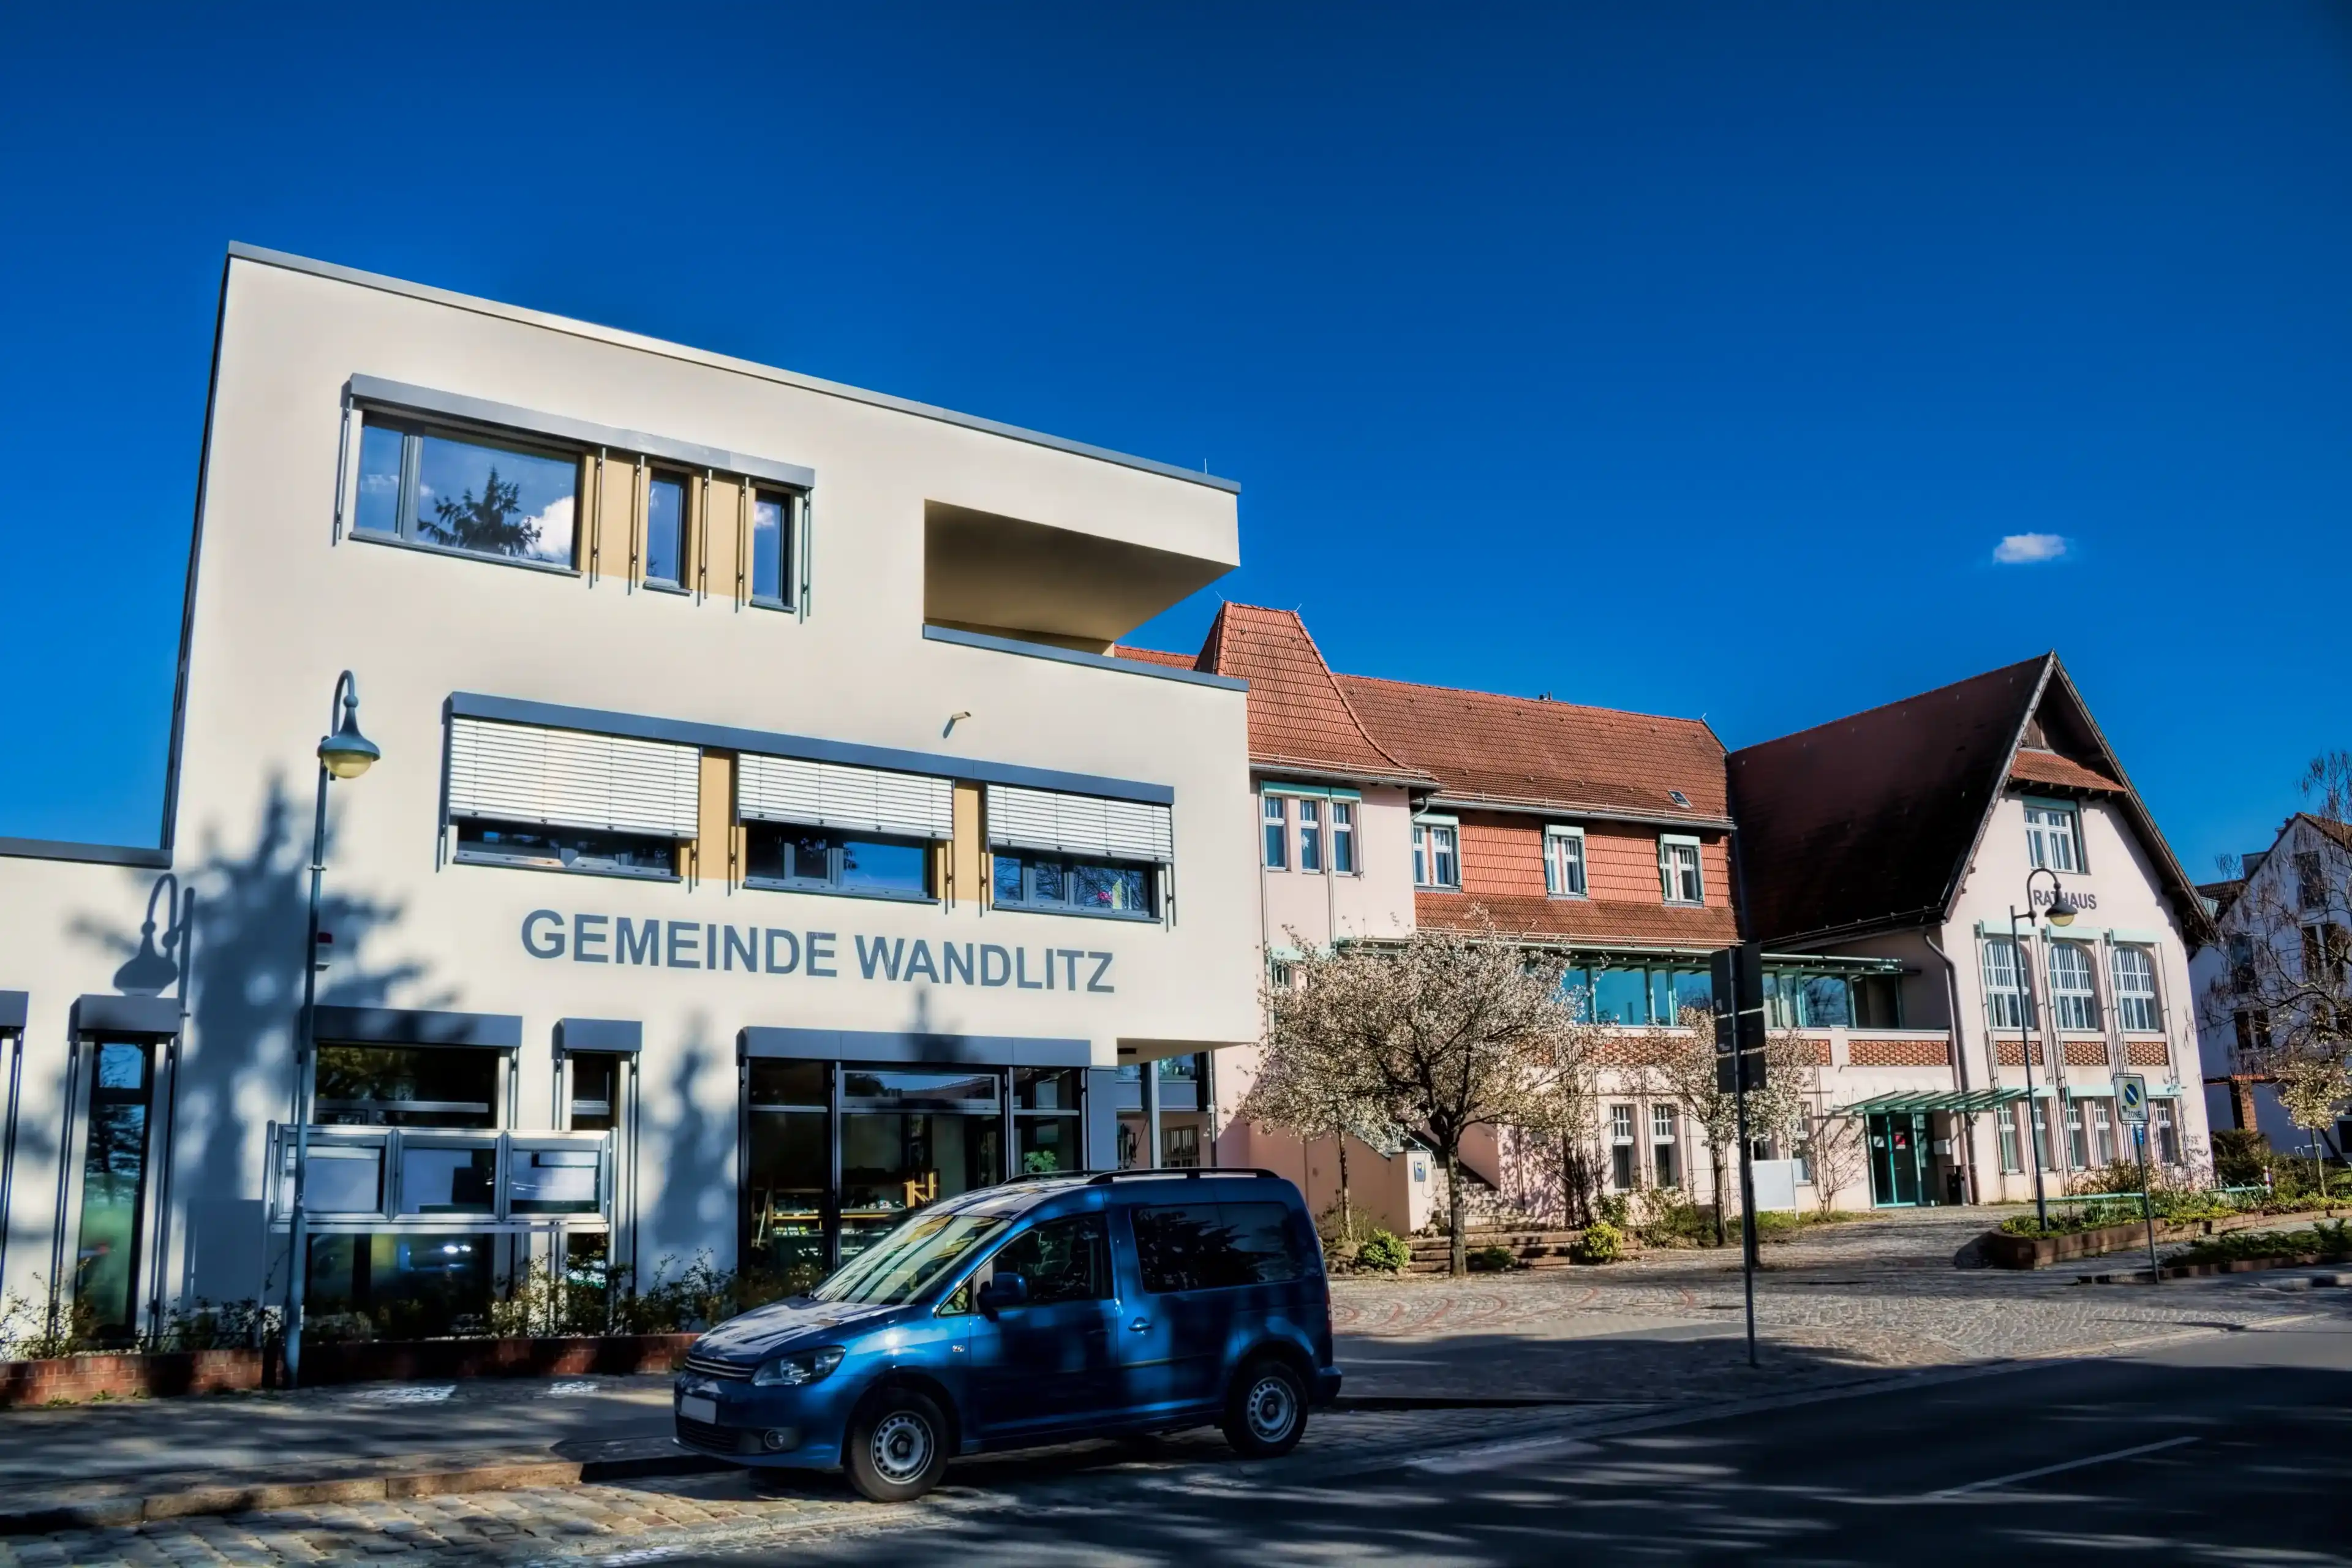 Best Wandlitz hotels. Cheap hotels in Wandlitz, Germany